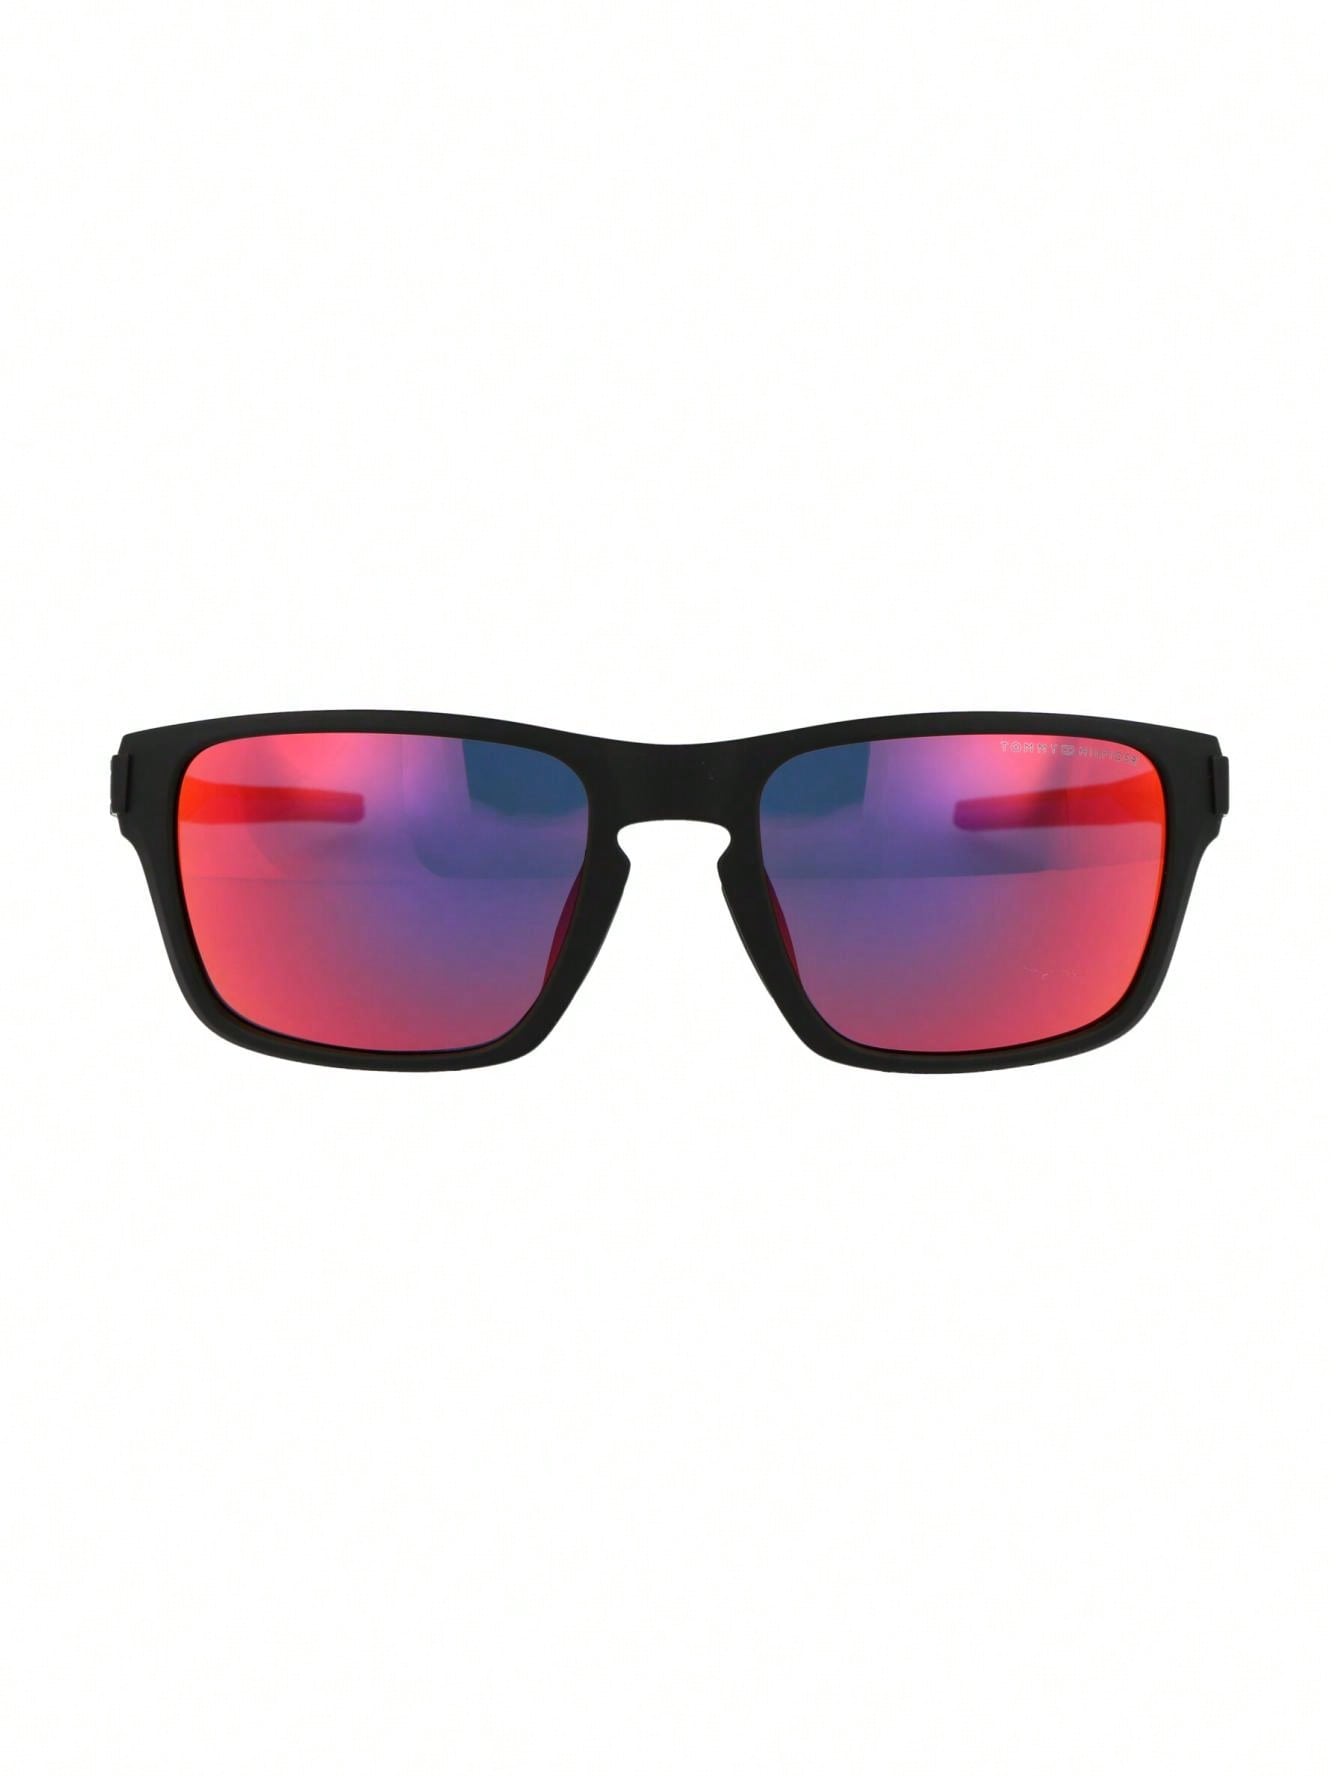 Мужские солнцезащитные очки Tommy Hilfiger DECOR TH1952S0VKPL, многоцветный солнцезащитные очки tommy hilfiger серый черный